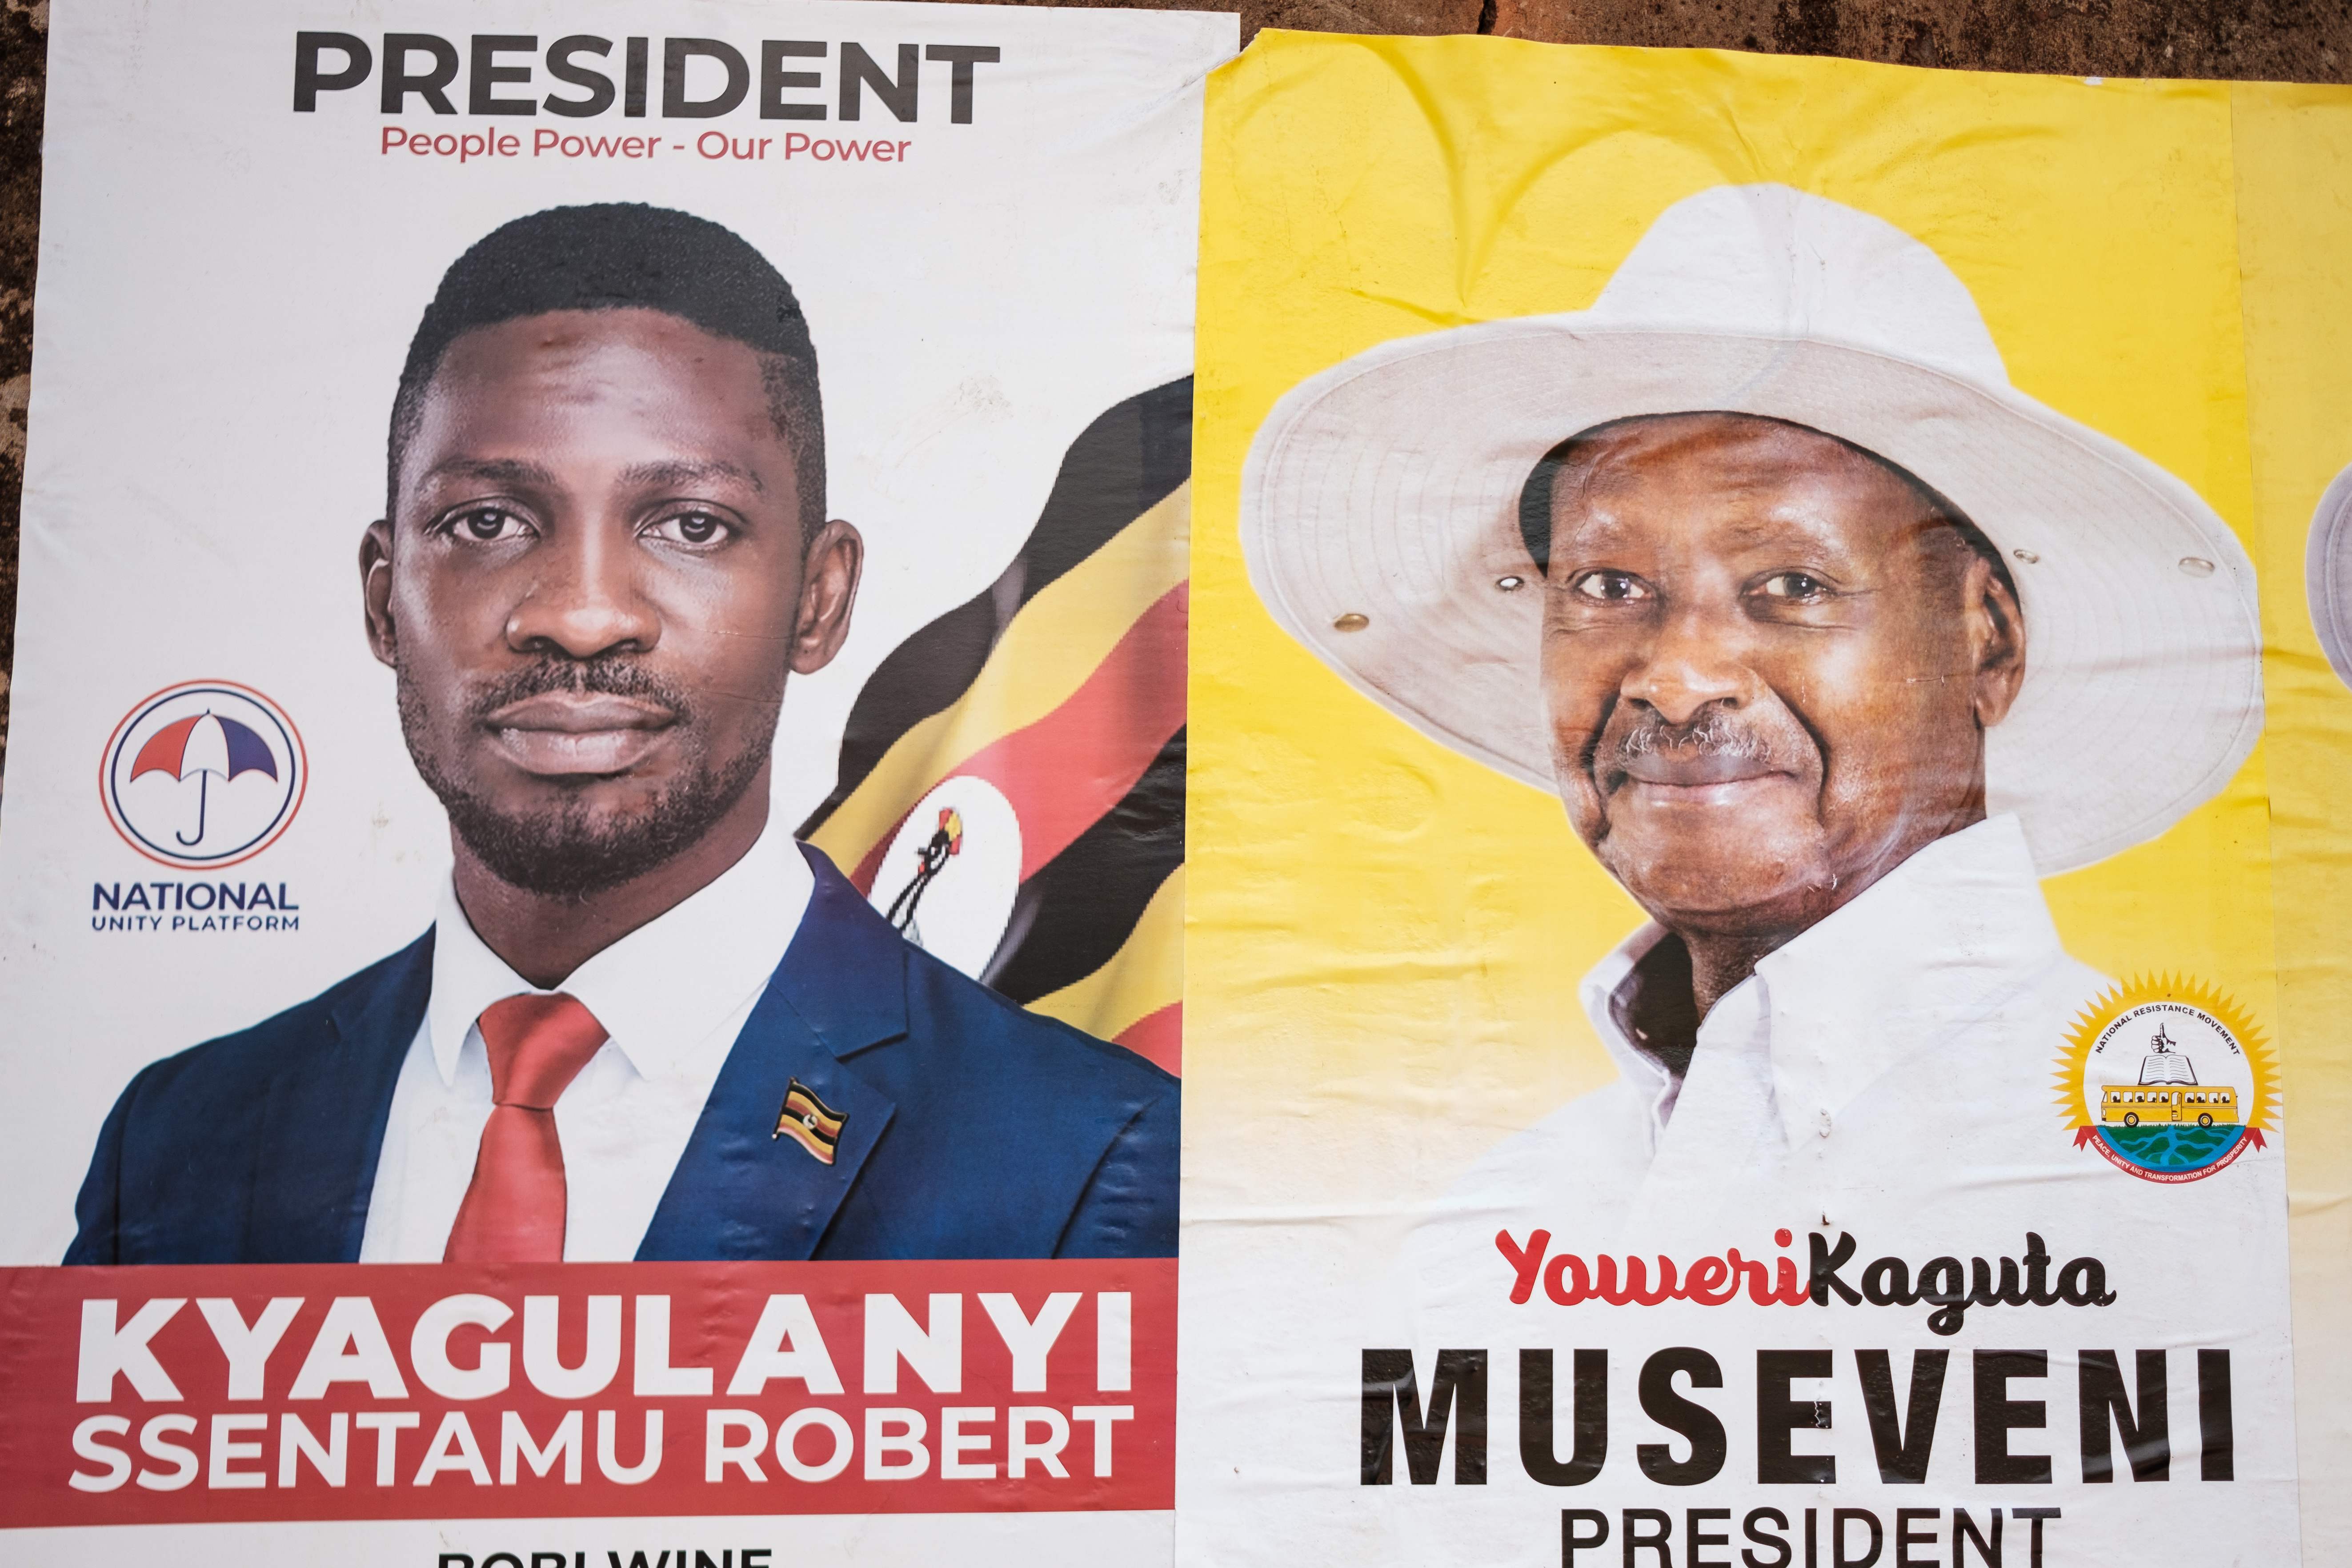 Posters show Bobi Wine (L) and incumbent president Yoweri Museveni (R) ahead of Uganda’s national election on 14 January, 2021.